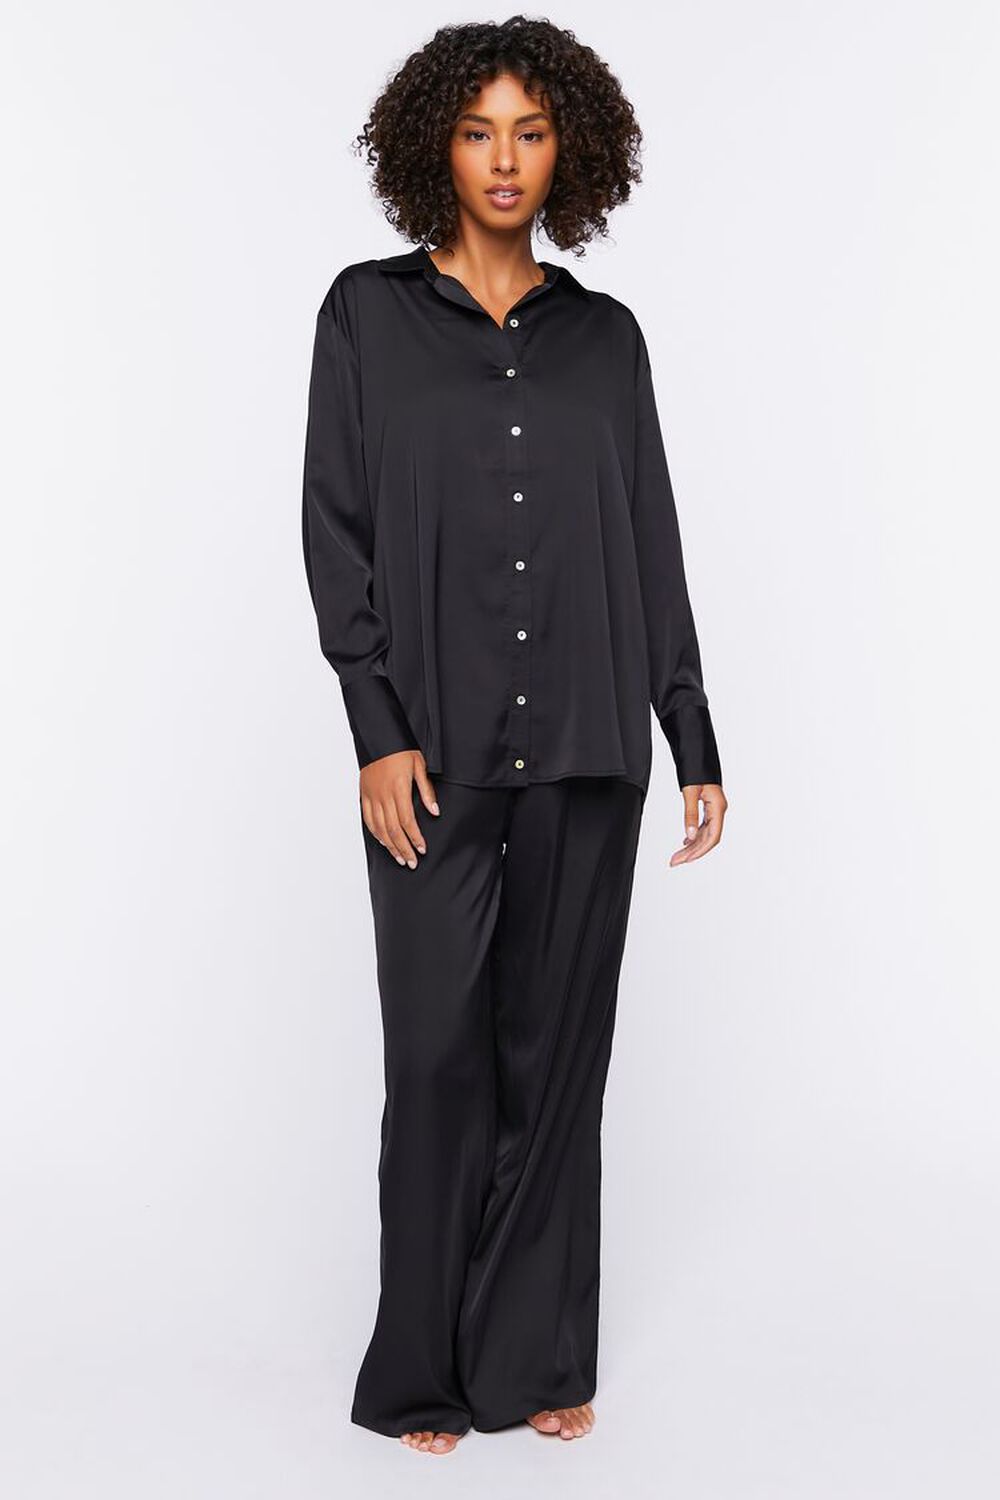 Women's Satin Pajama Pants - Colsie™ Black XS